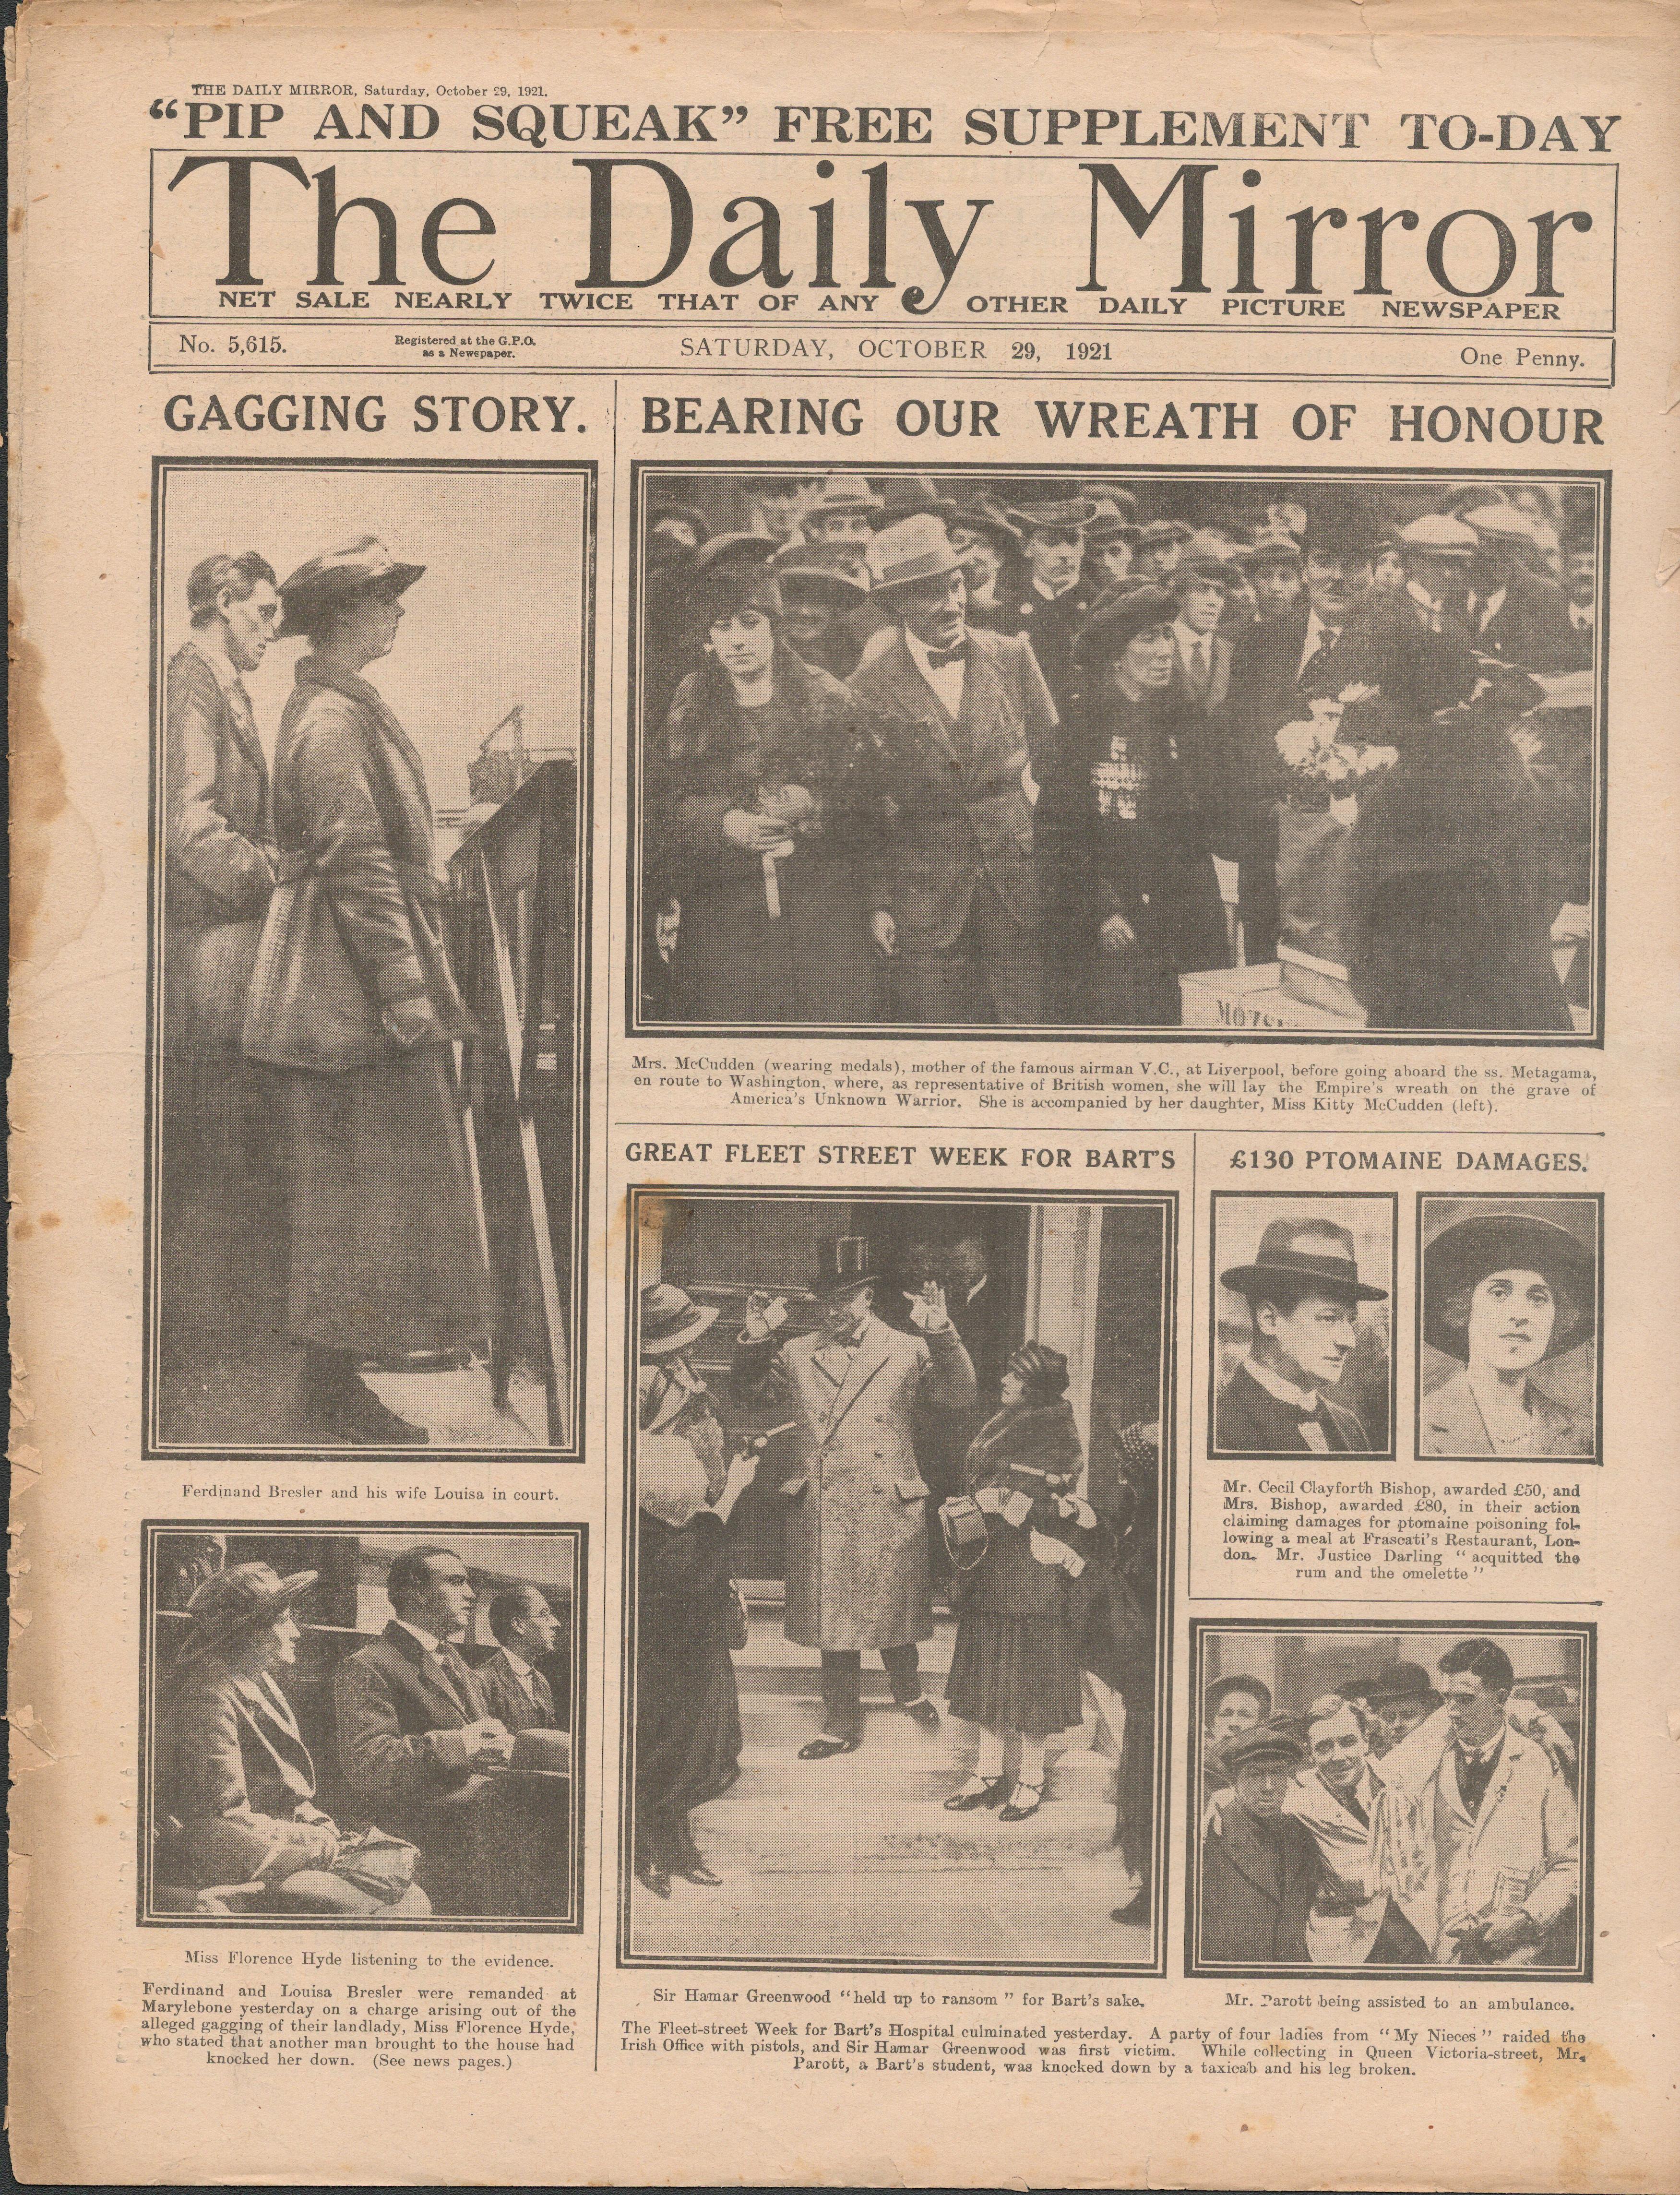 LLoyd George Dramatic Move In Irish Deadlock Original 1921 Newspaper - Image 2 of 2